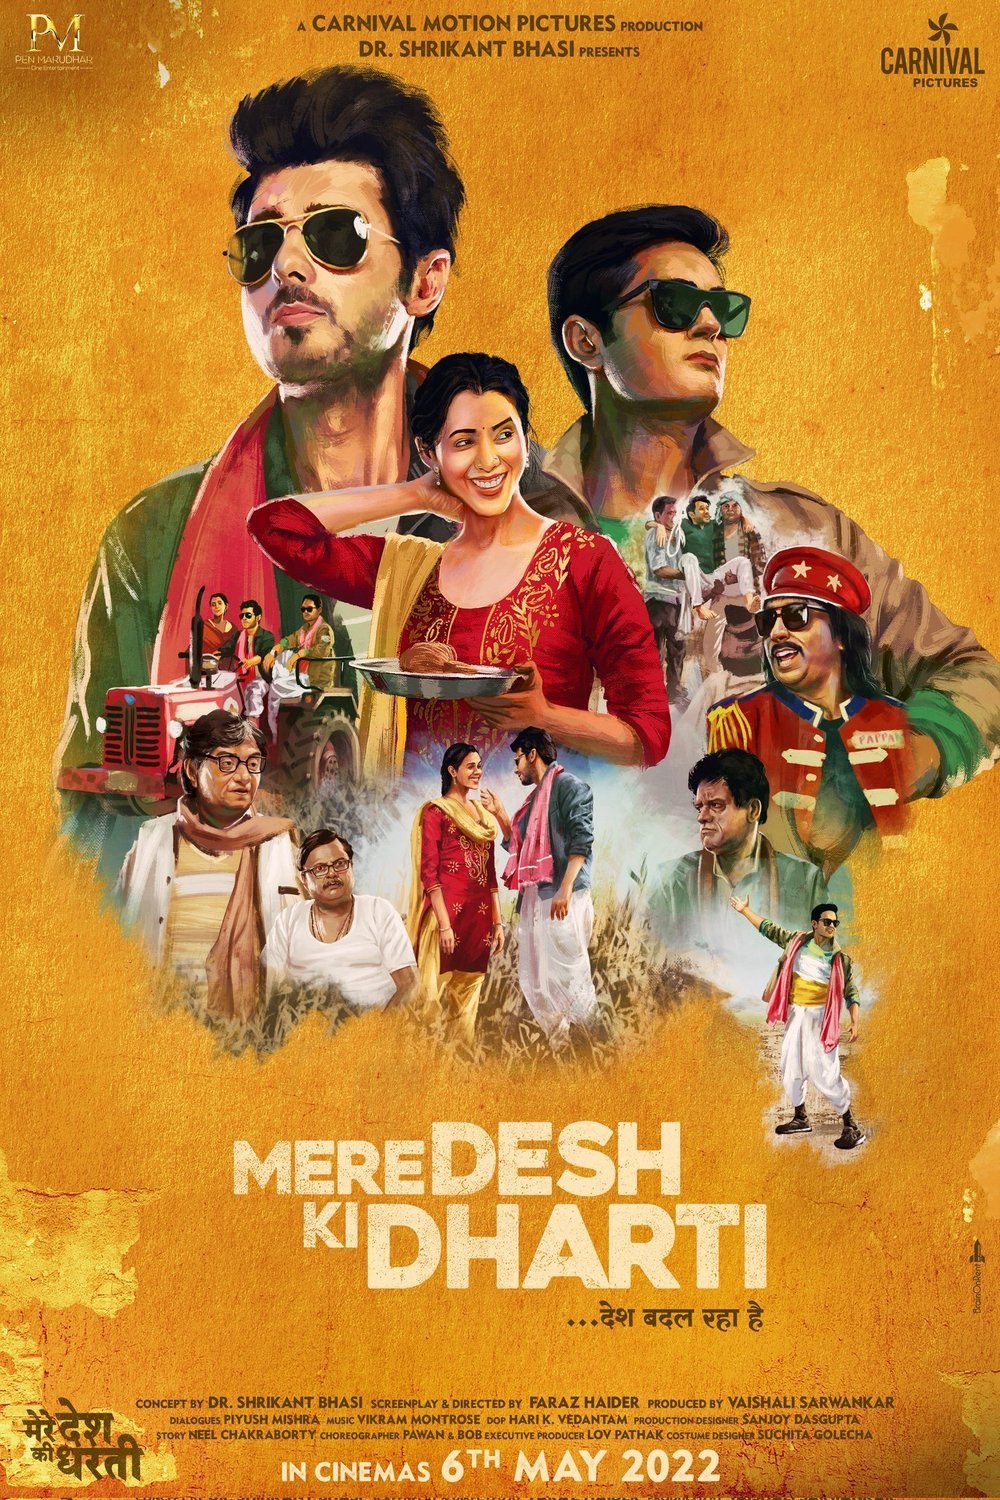 Hindi poster of the movie Mere Desh Ki Dharti